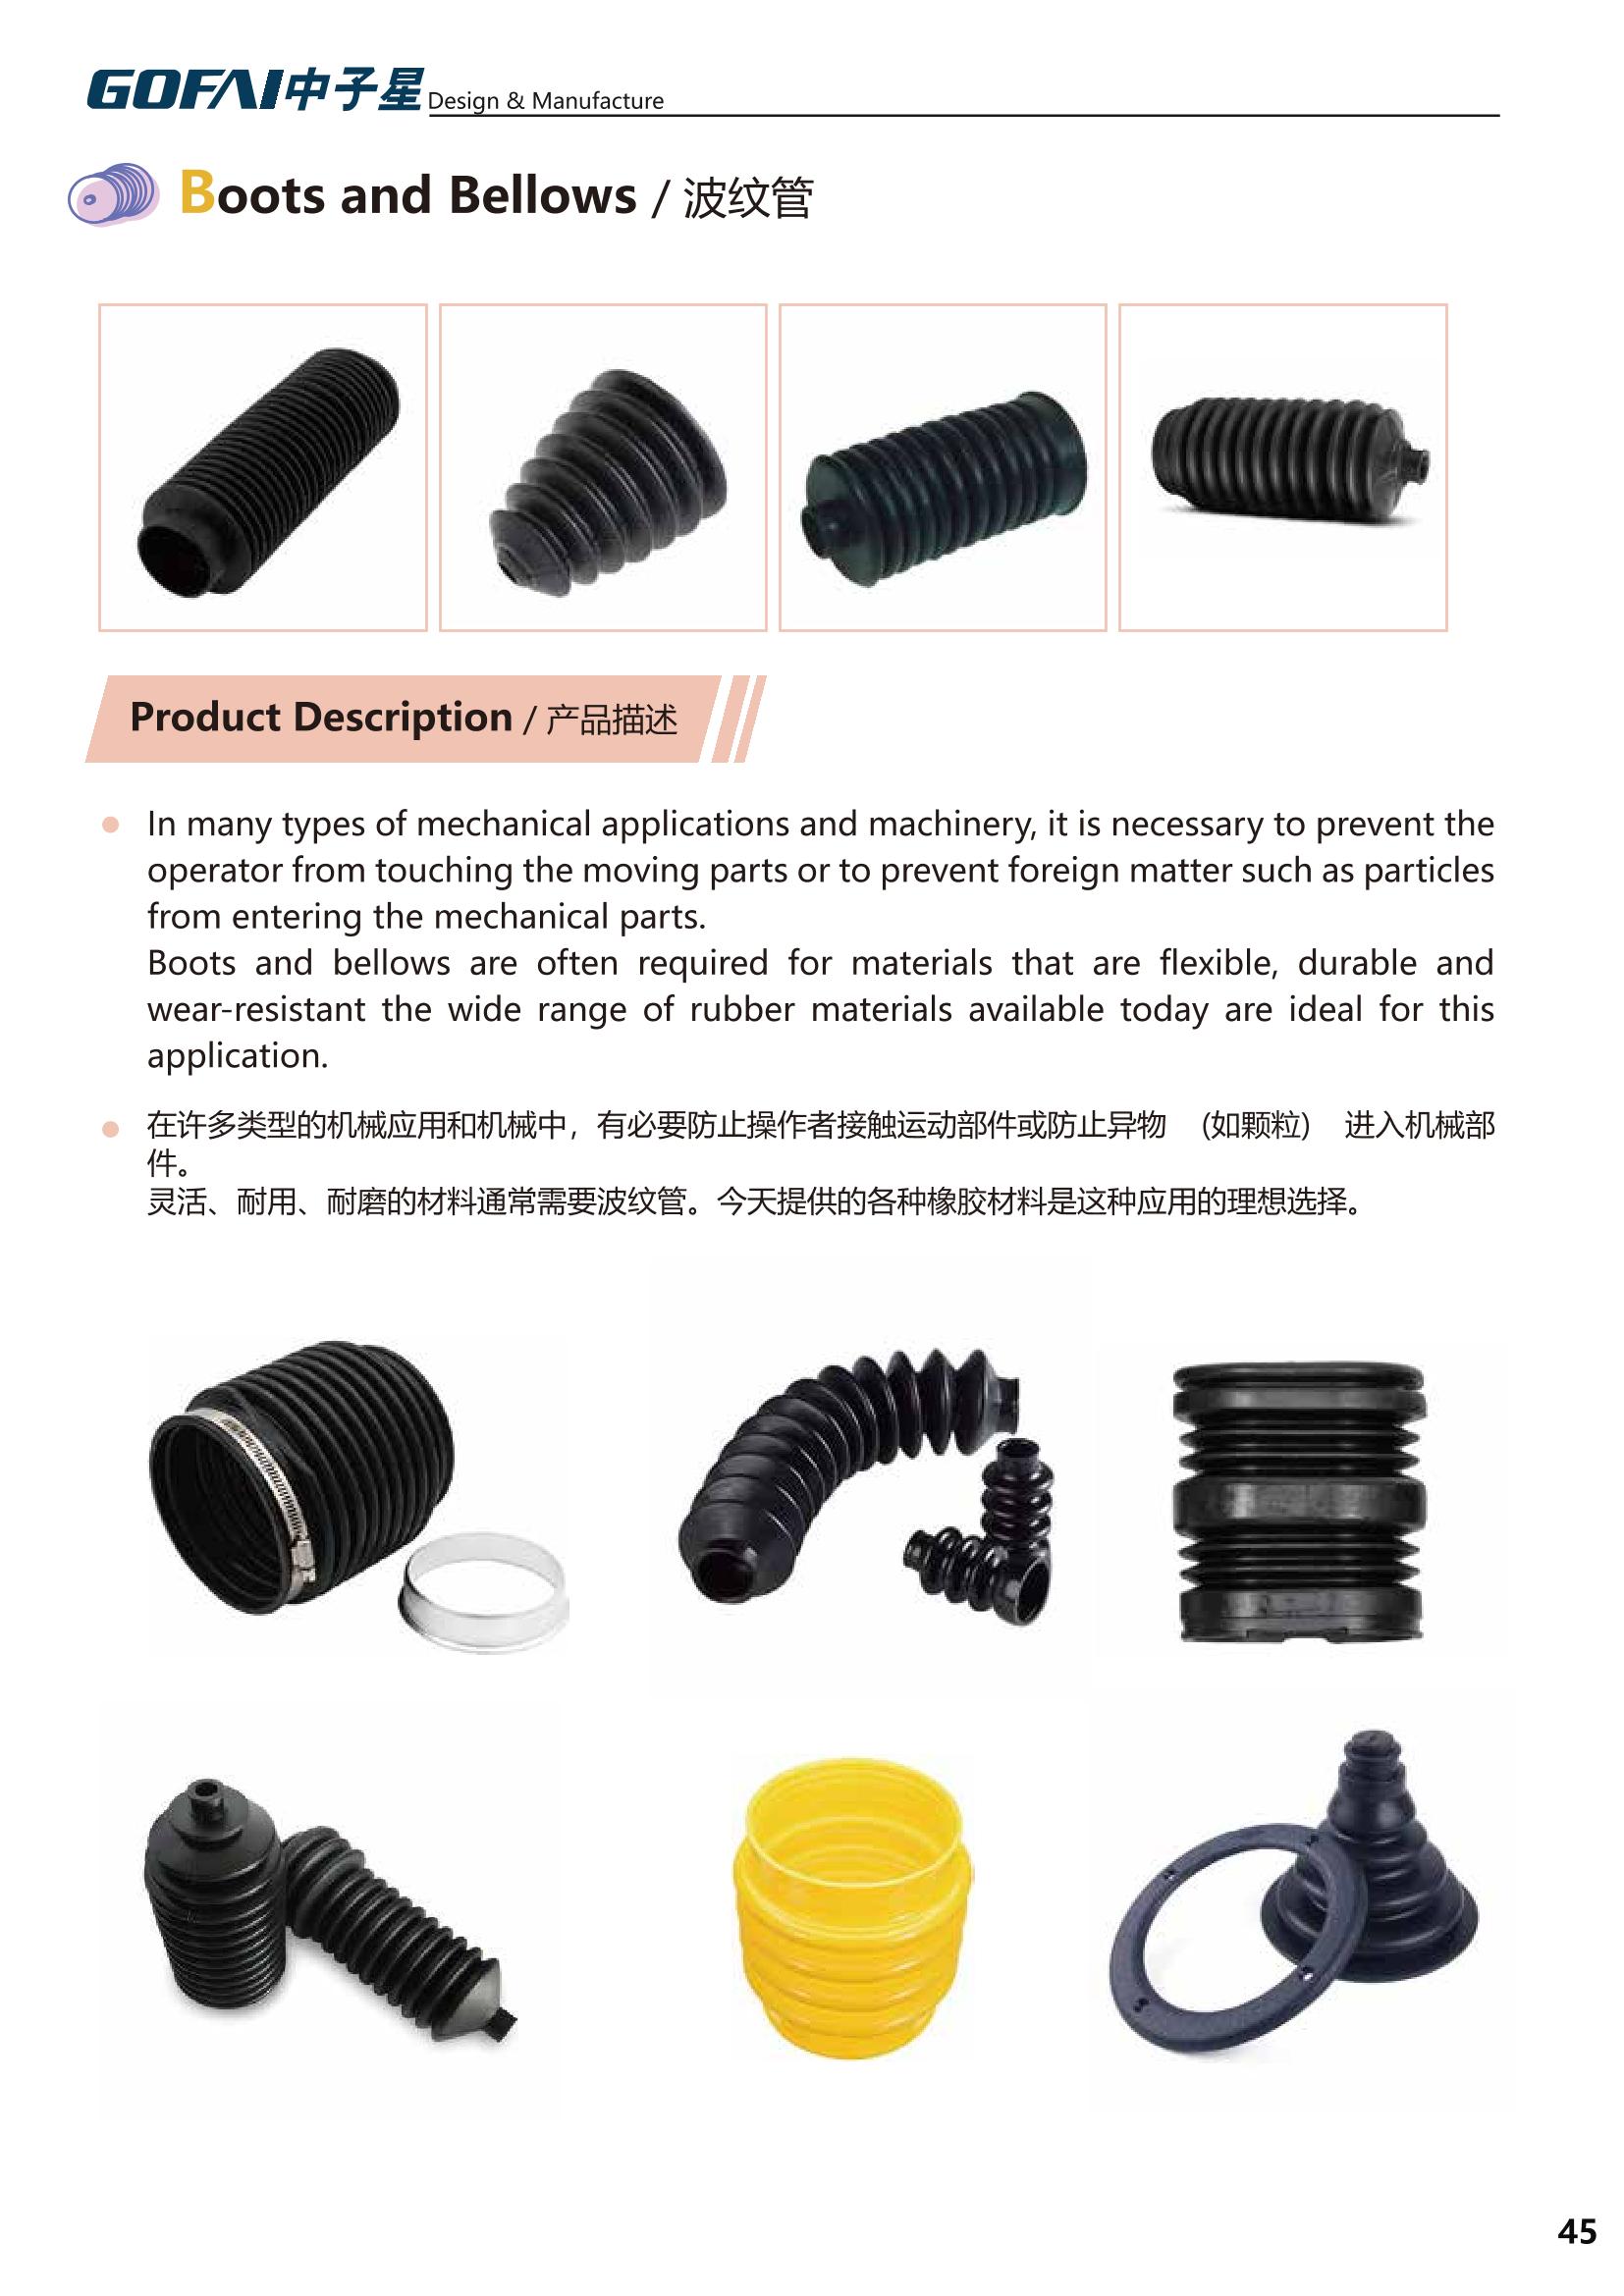 GOFAI product catalog_45.jpg